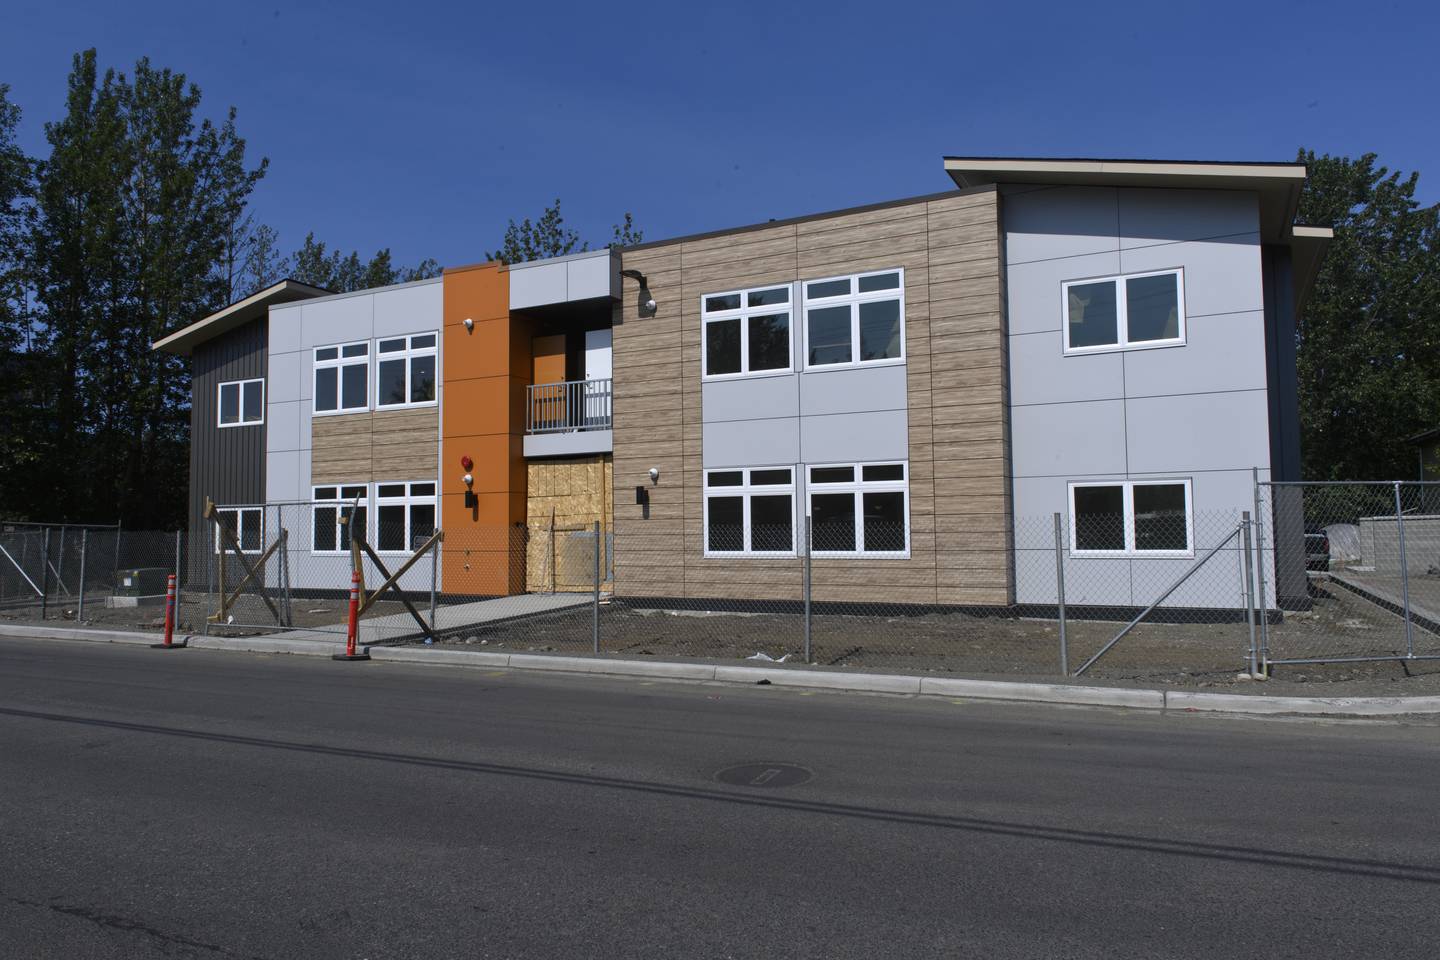 Cook Inlet Housing Authority, Spenard